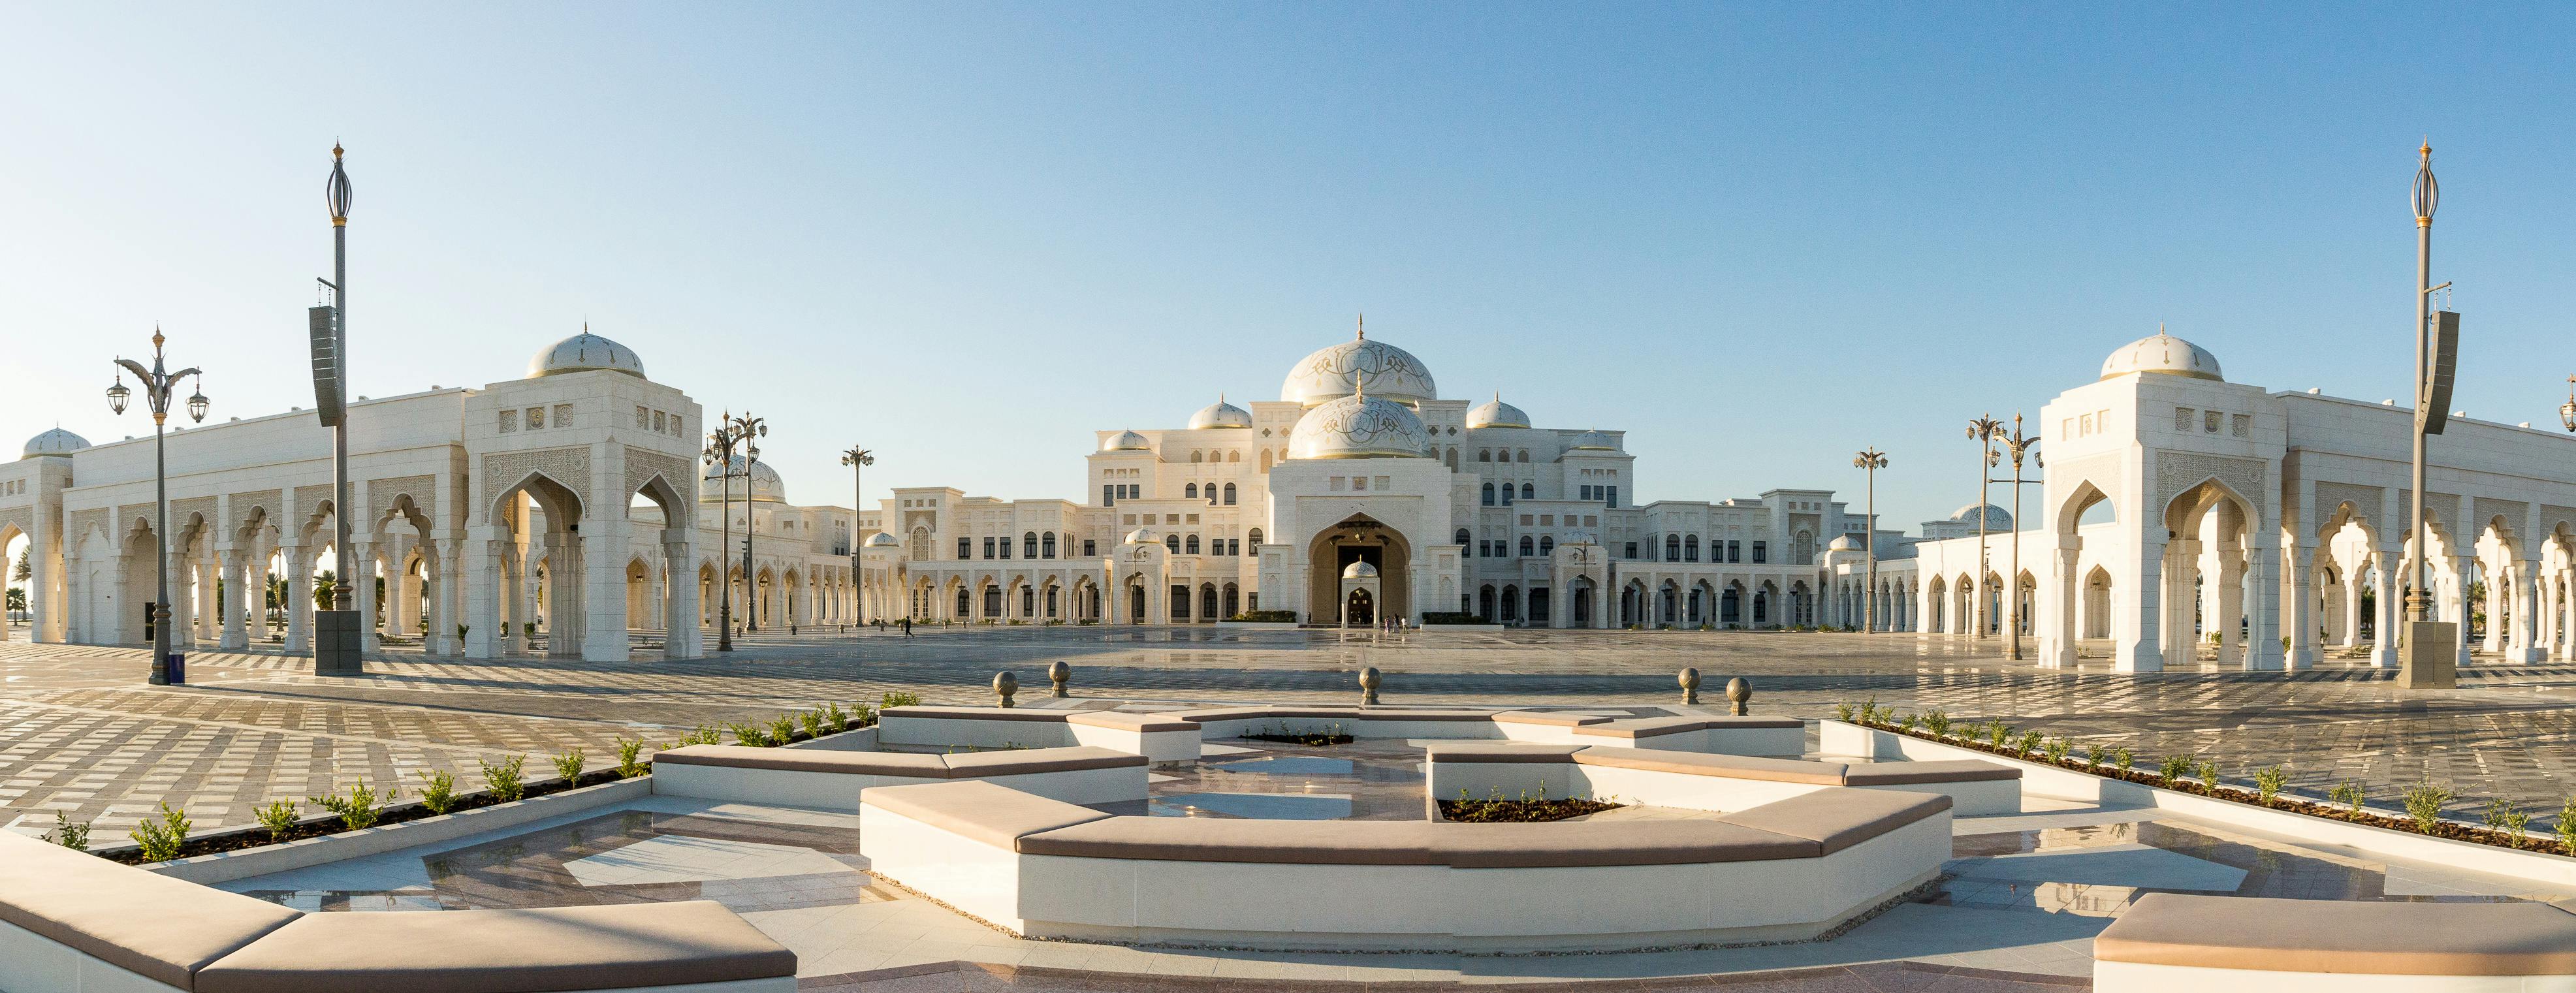 Qasr Al Watan - Palais Présidentiel